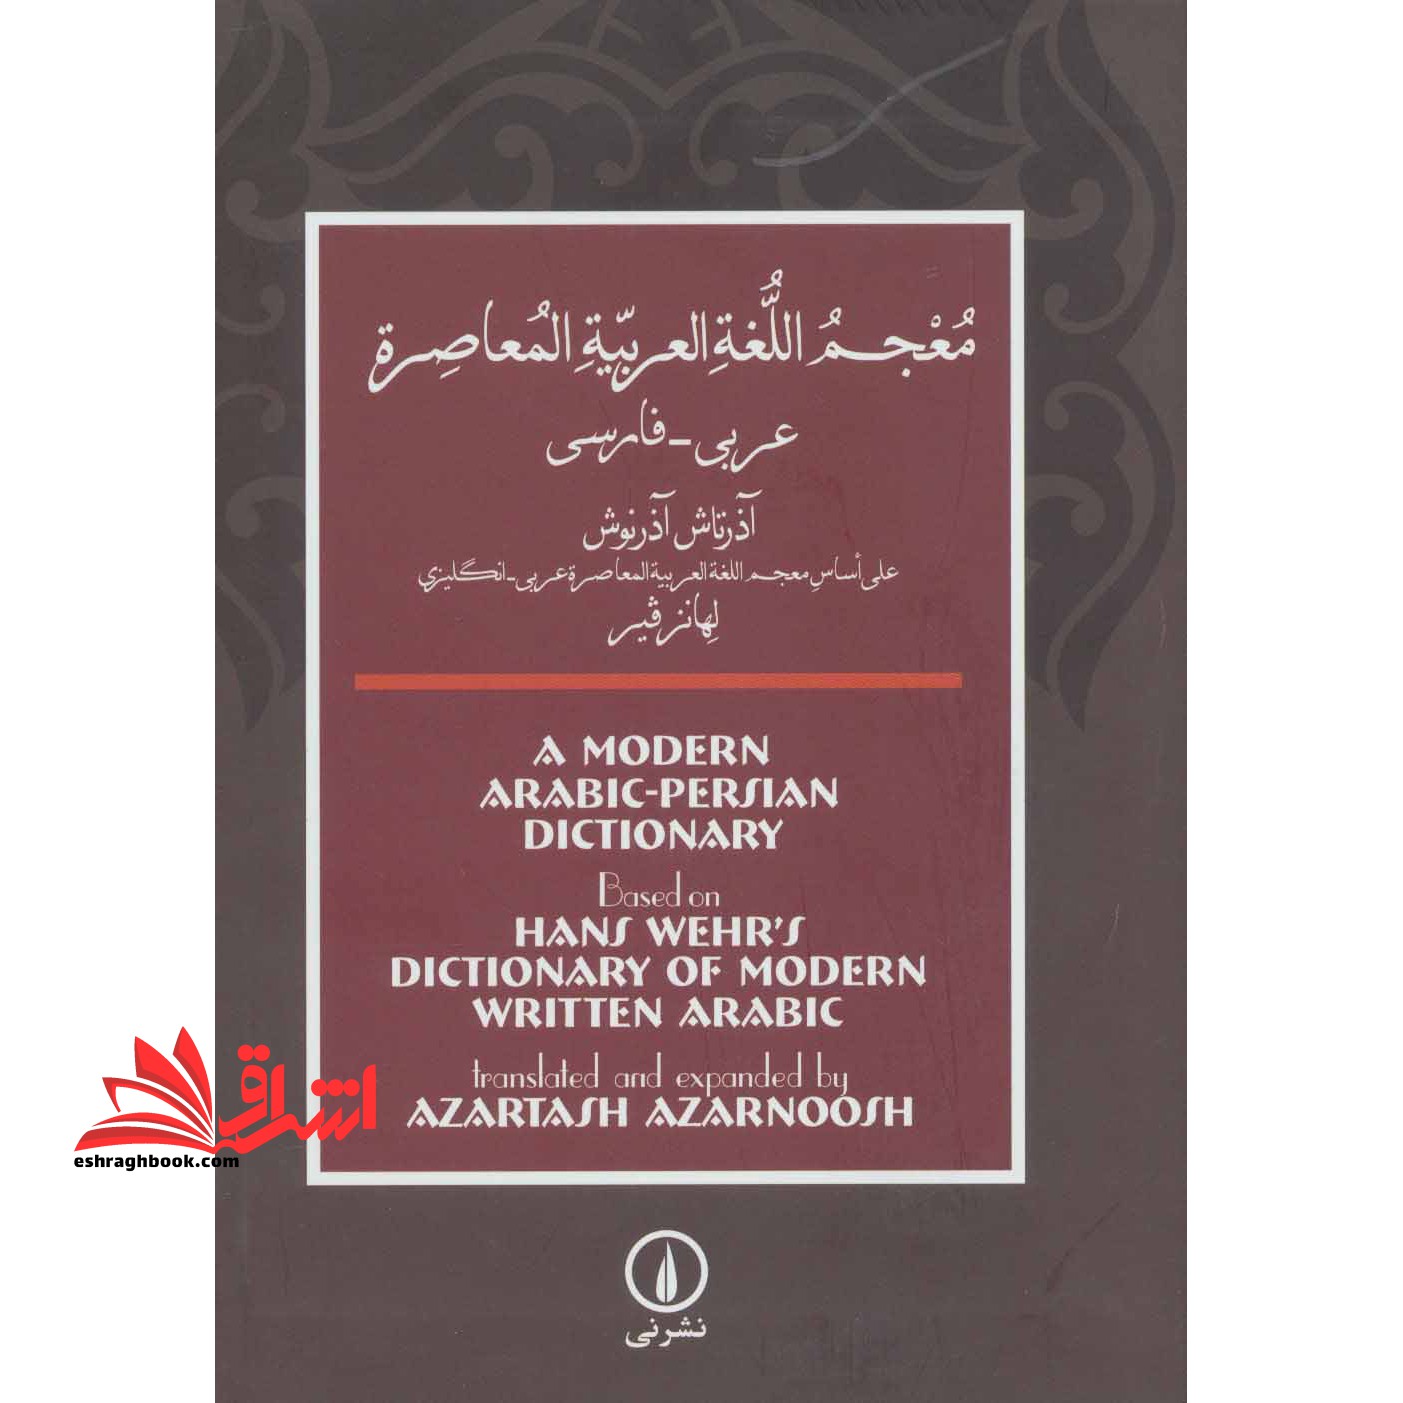 فرهنگ معاصر عربی - فارسی: بر اساس فرهنگ عربی - انگلیسی هانس ور (A dictionary of modern written Arabic)